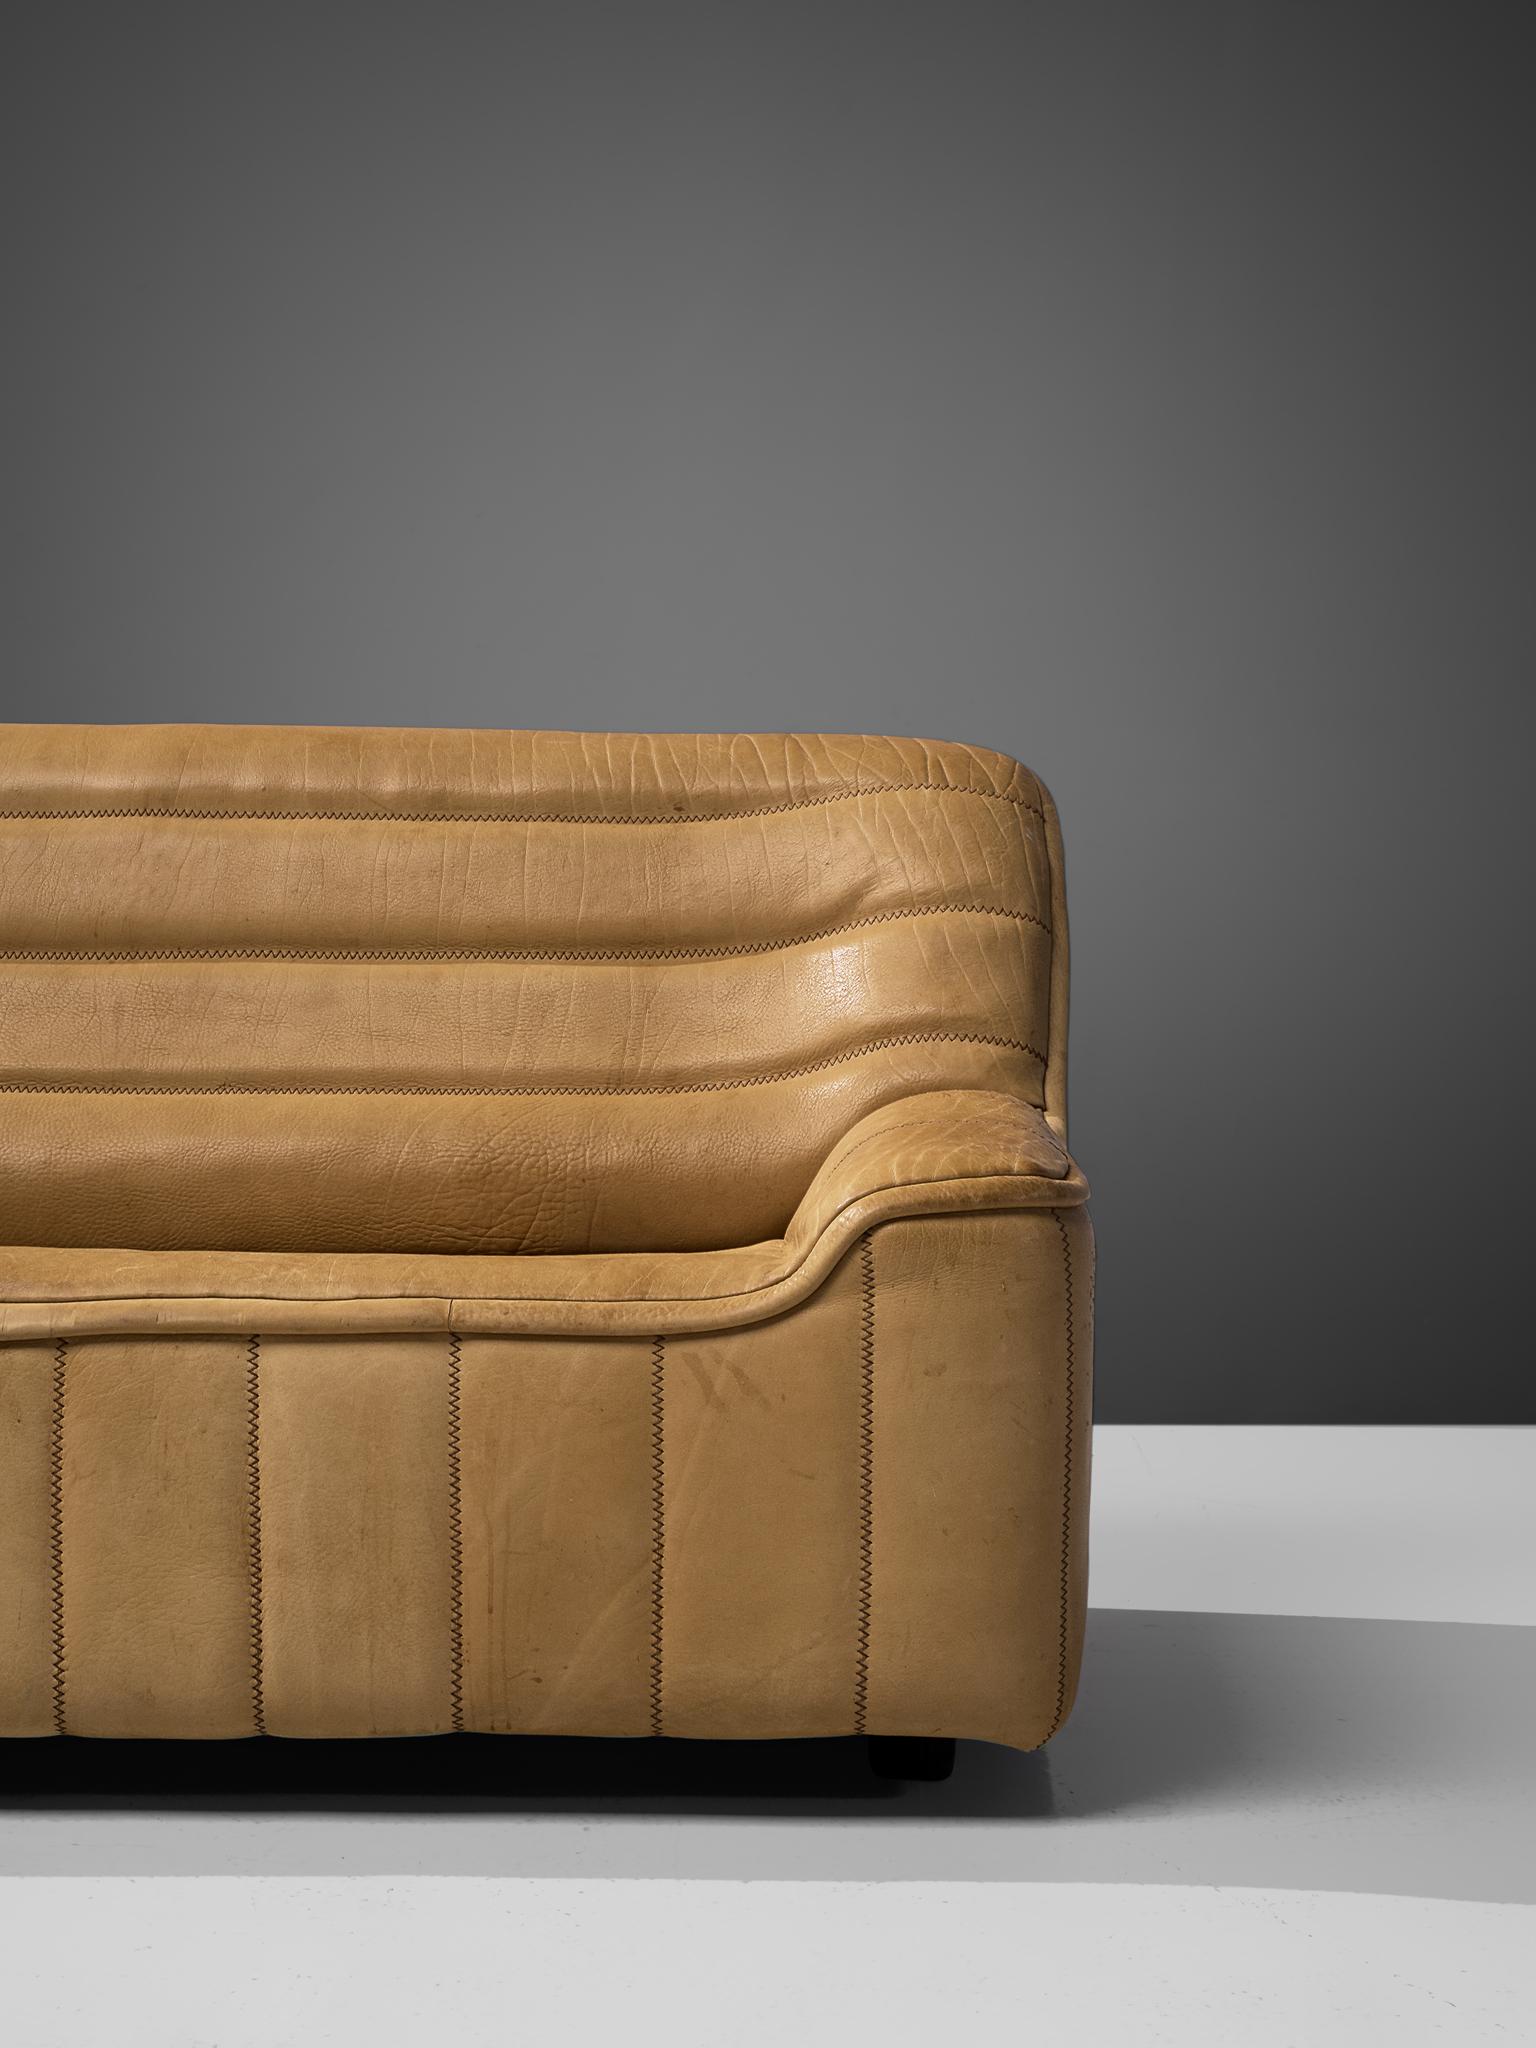 De Sede 'DS-84' Sofa in Buffalo Leather 1